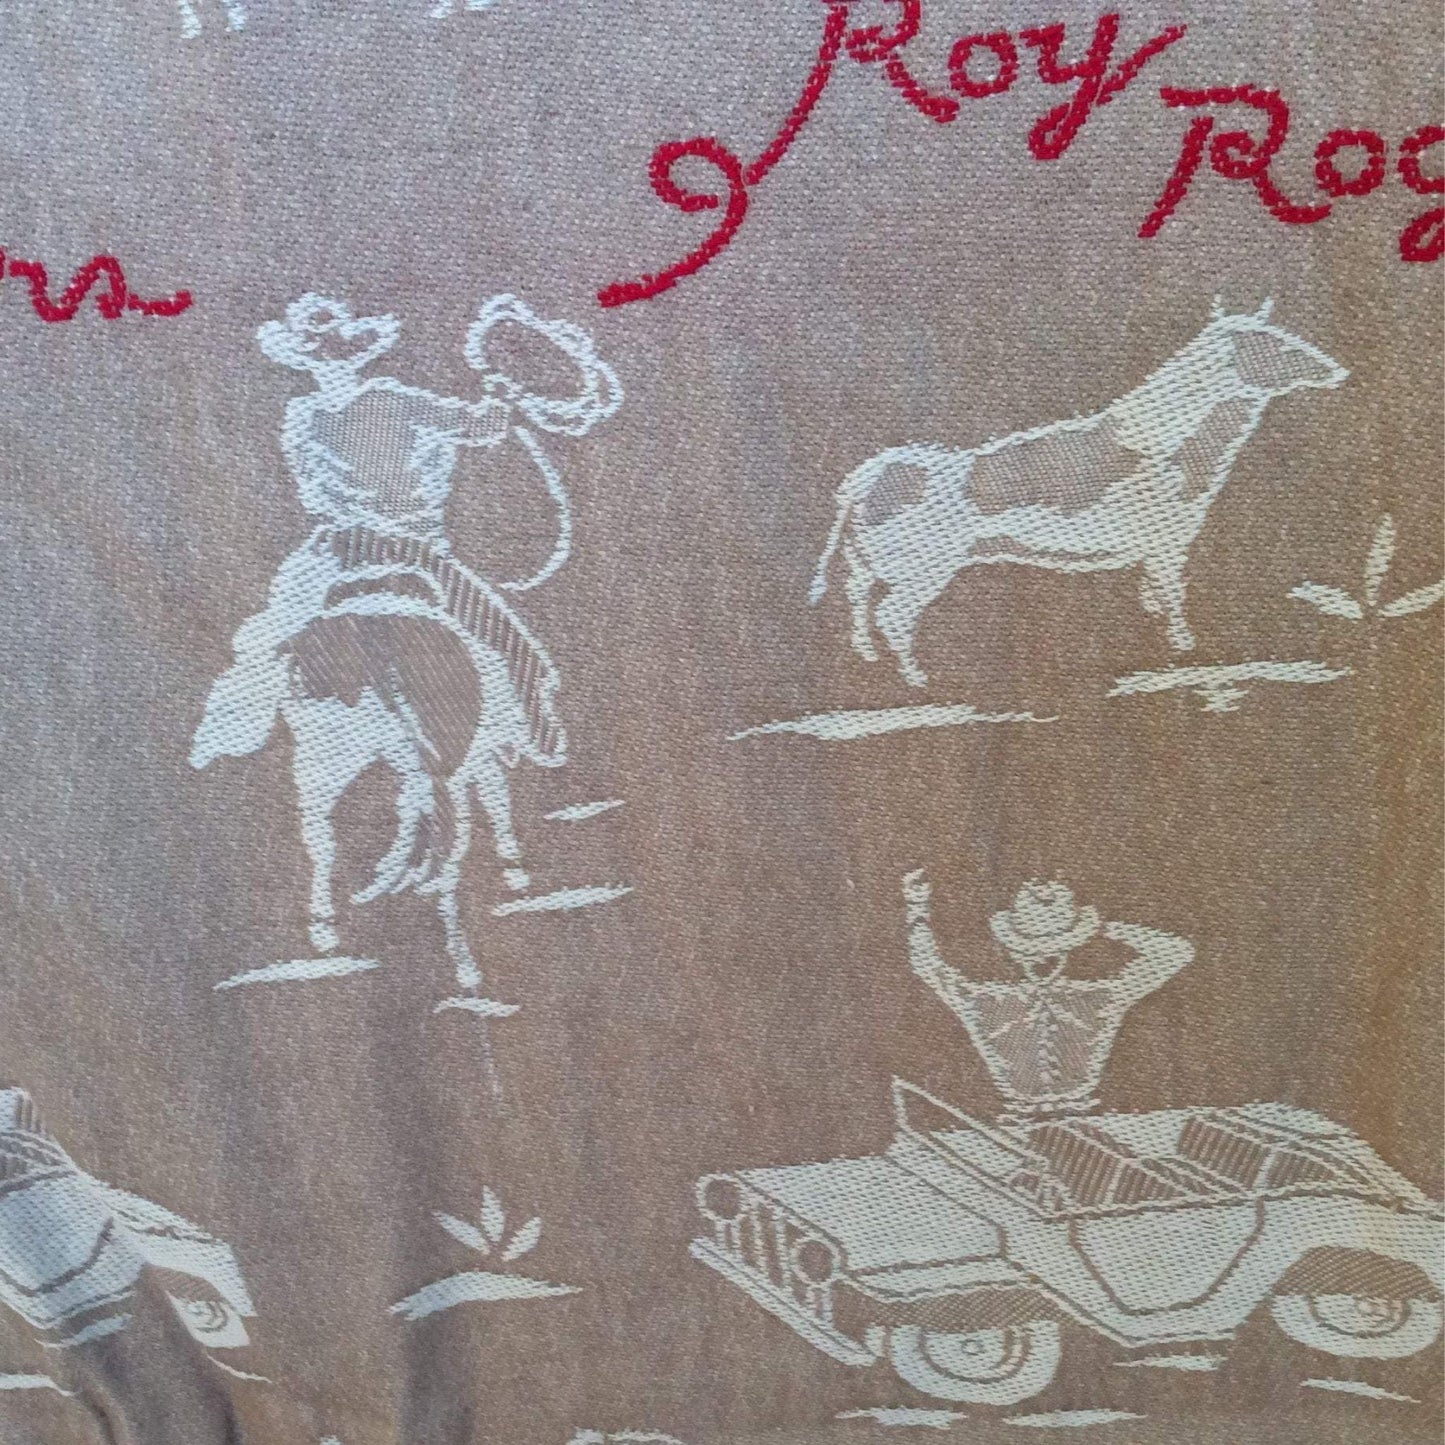 Roy Rogers Bedspread Multi / Cotton / Vintage 1950s